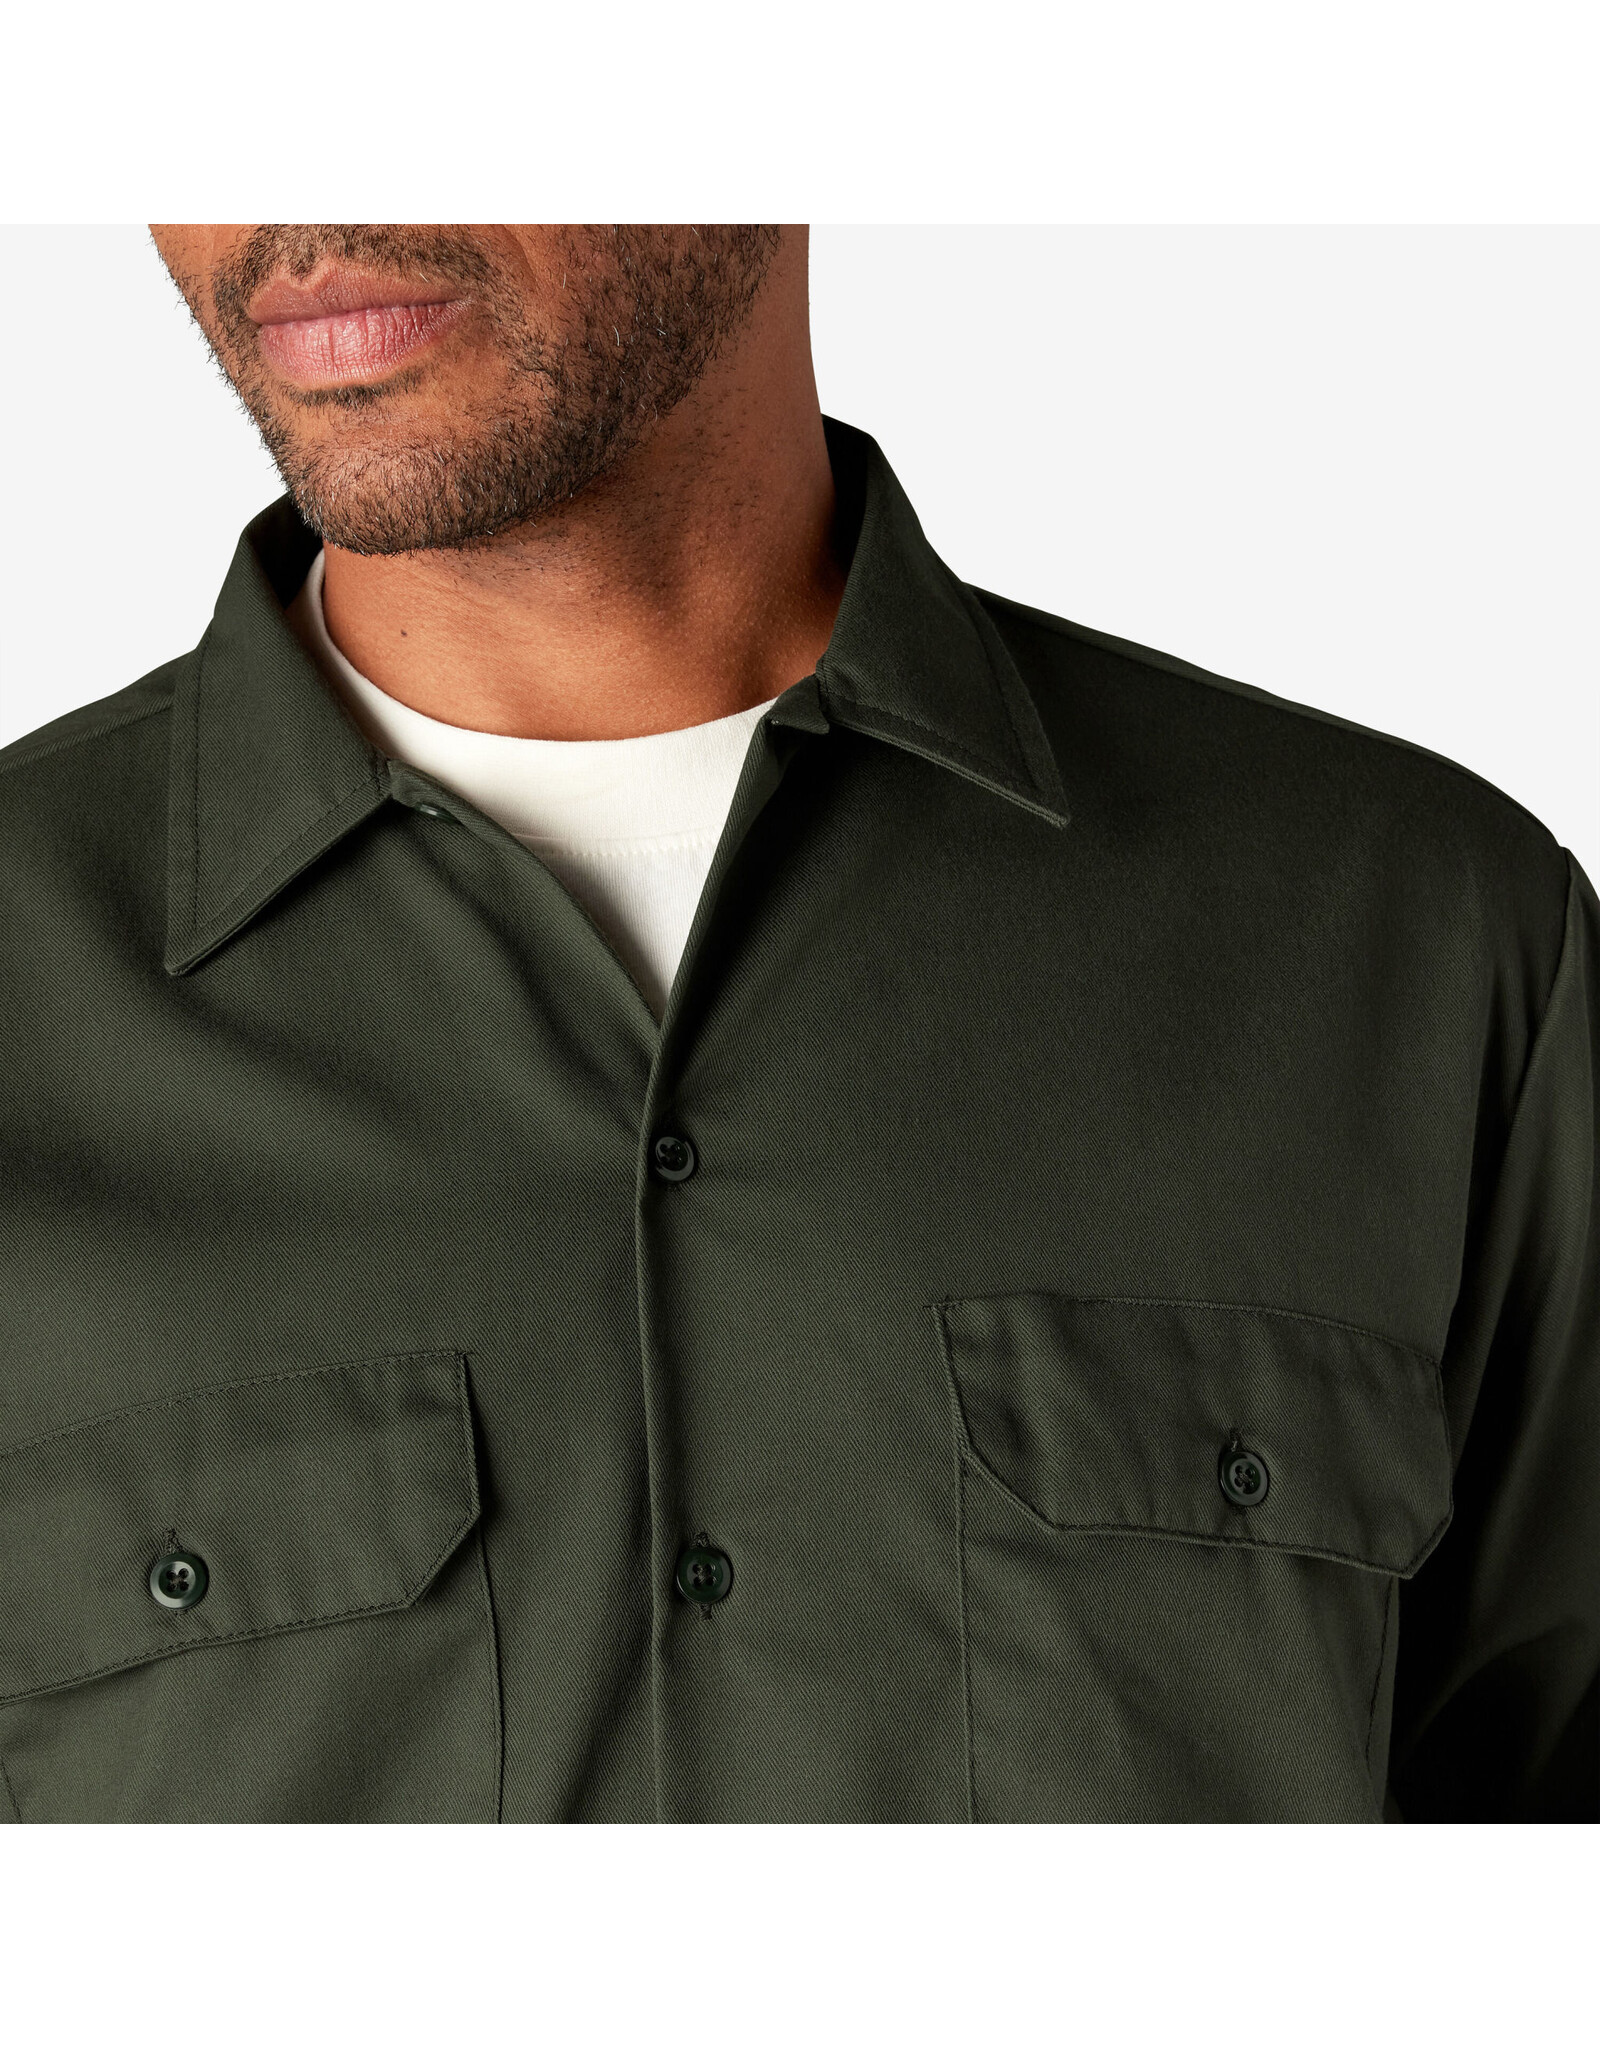 DICKIES Long Sleeve Work Shirt Olive Green Original Fit - 574OG